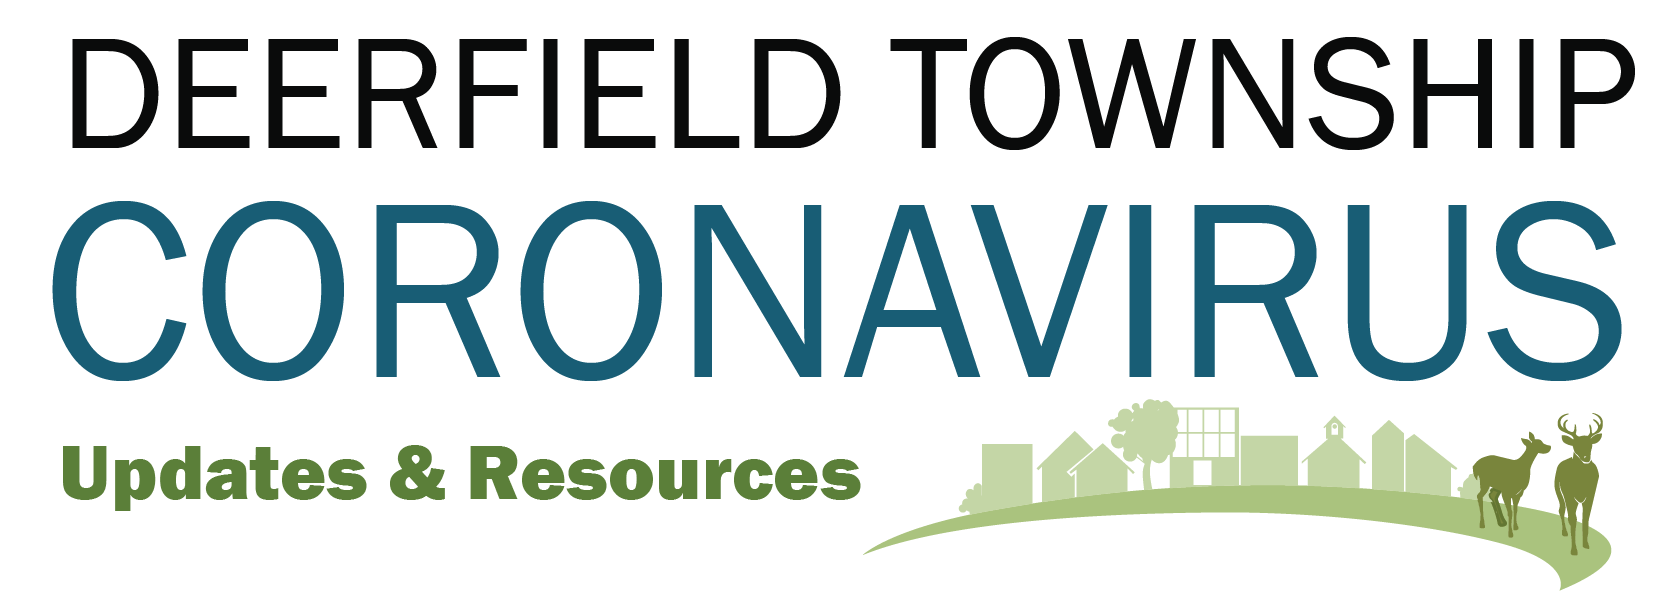 Deerfield Township Coronavirus Updates and Resources